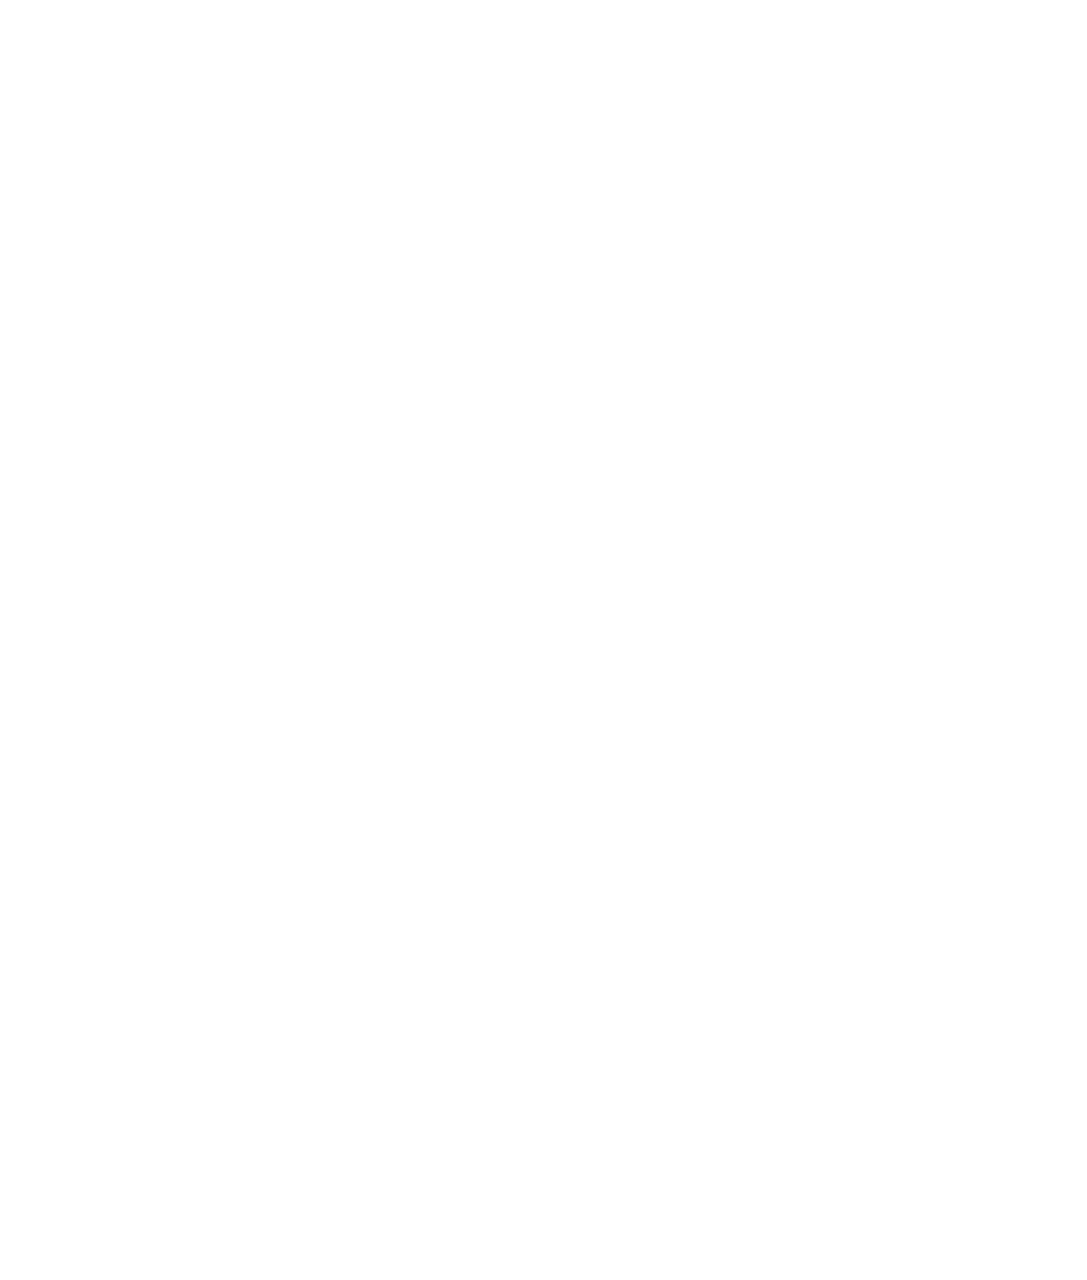 Верещагин П.П. Крым. Холст, масло. 53,2х44,3. Государственный художественный музей, Ханты-Мансийск